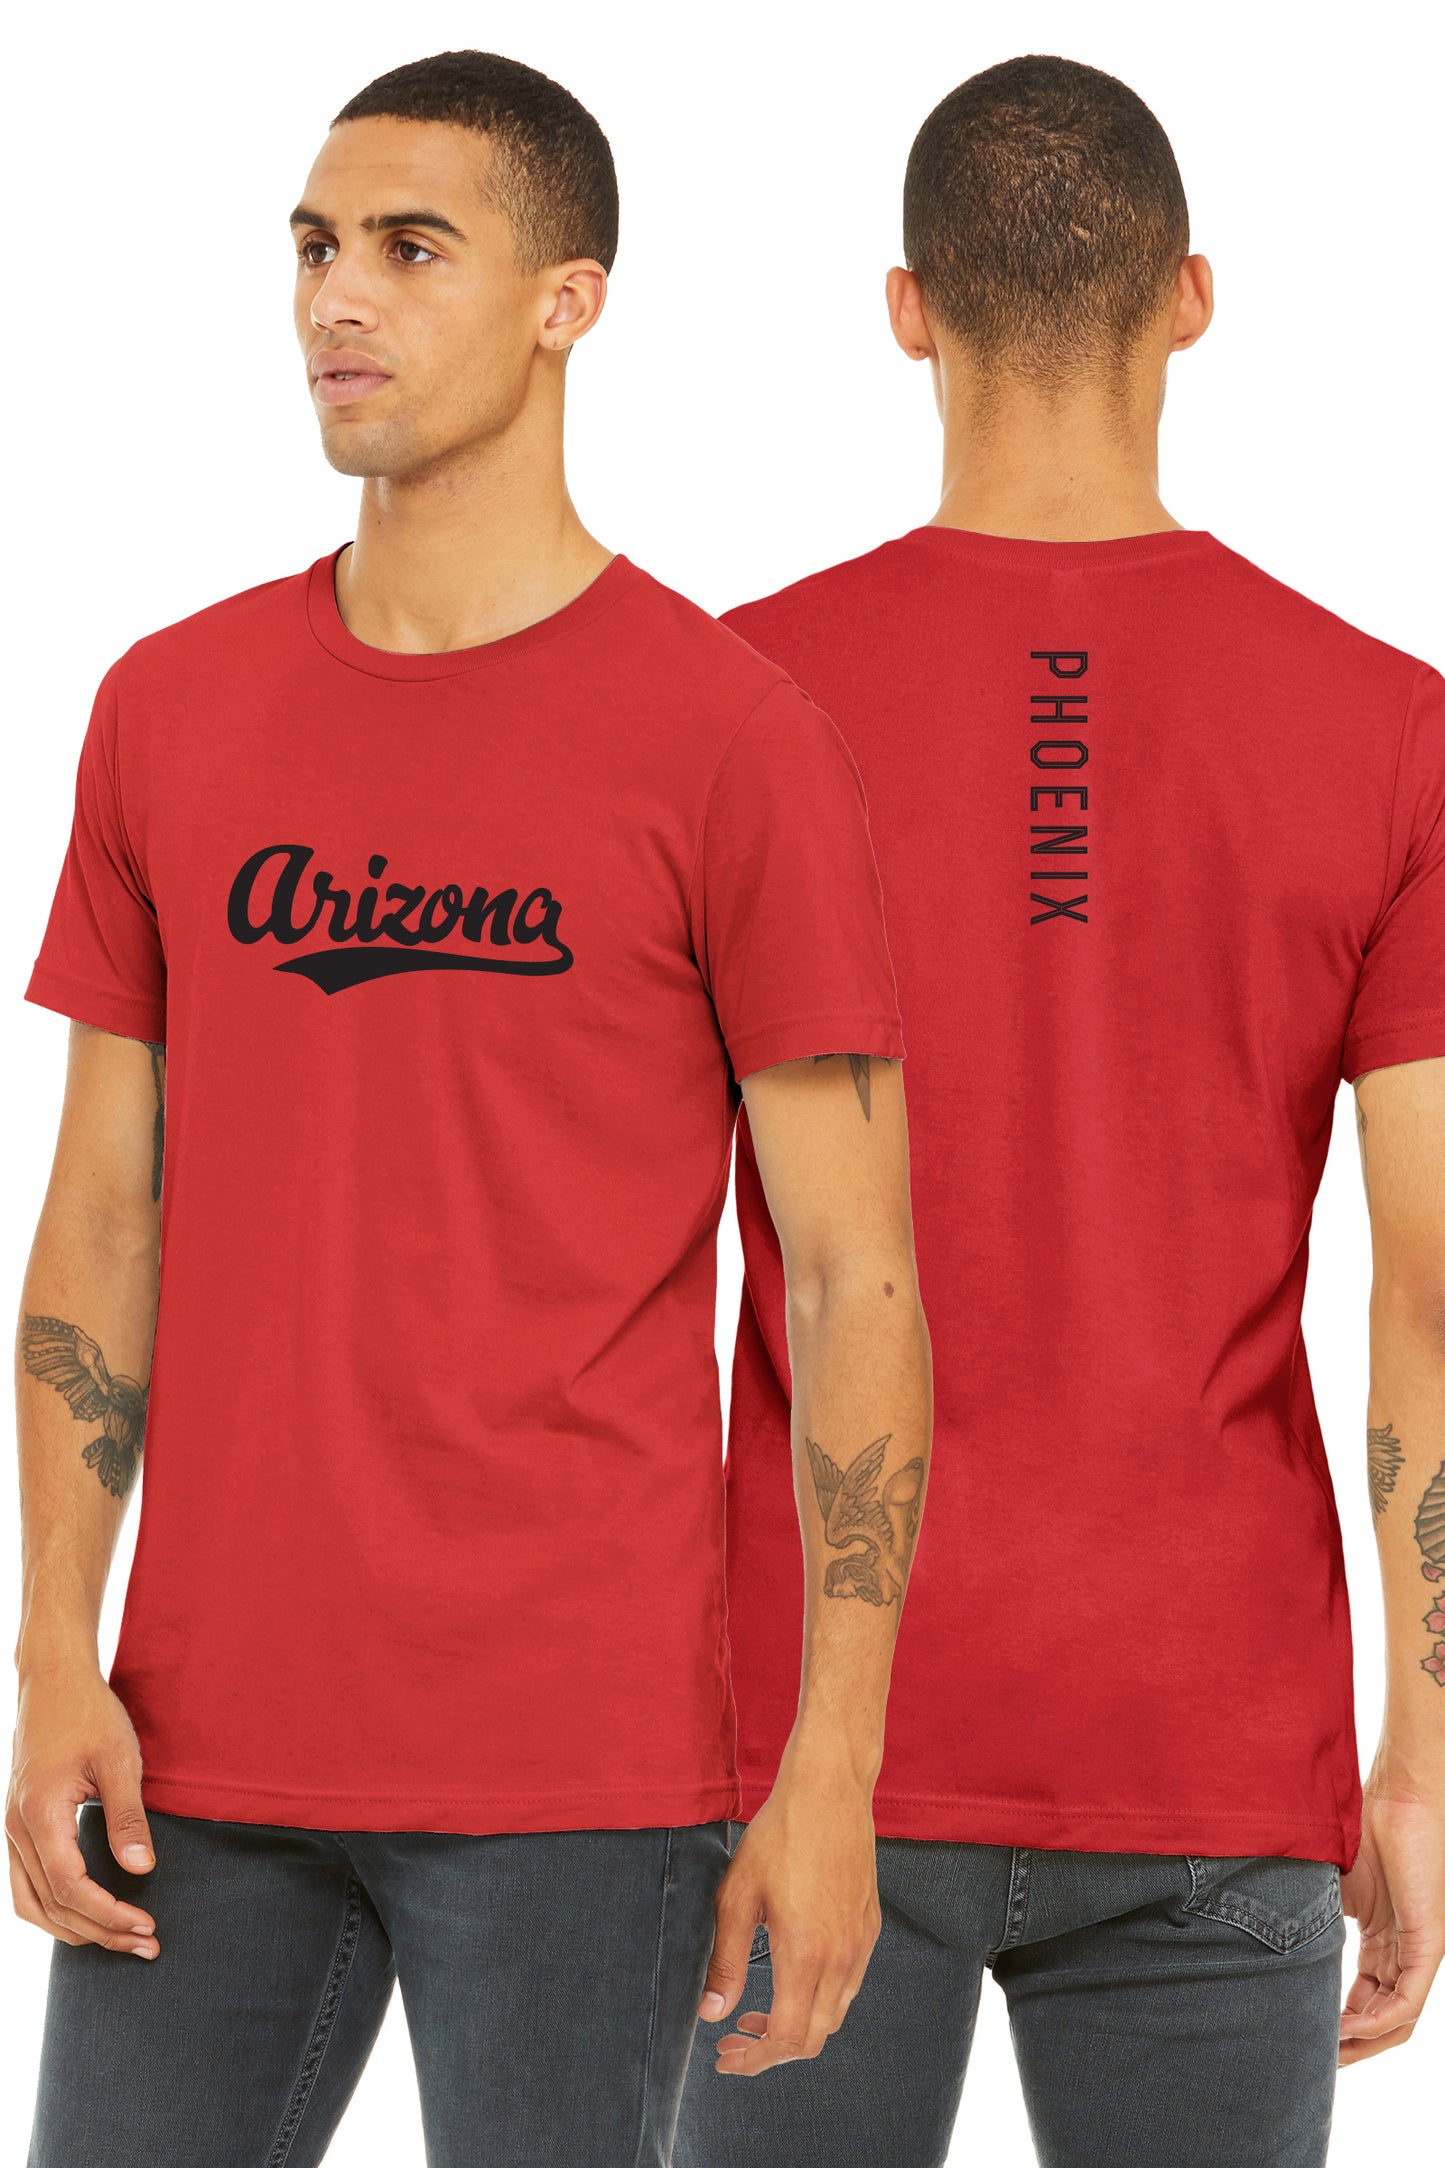 Daxton Adult Unisex Tshirt Arizona Script with Phoenix Vertical on The Back